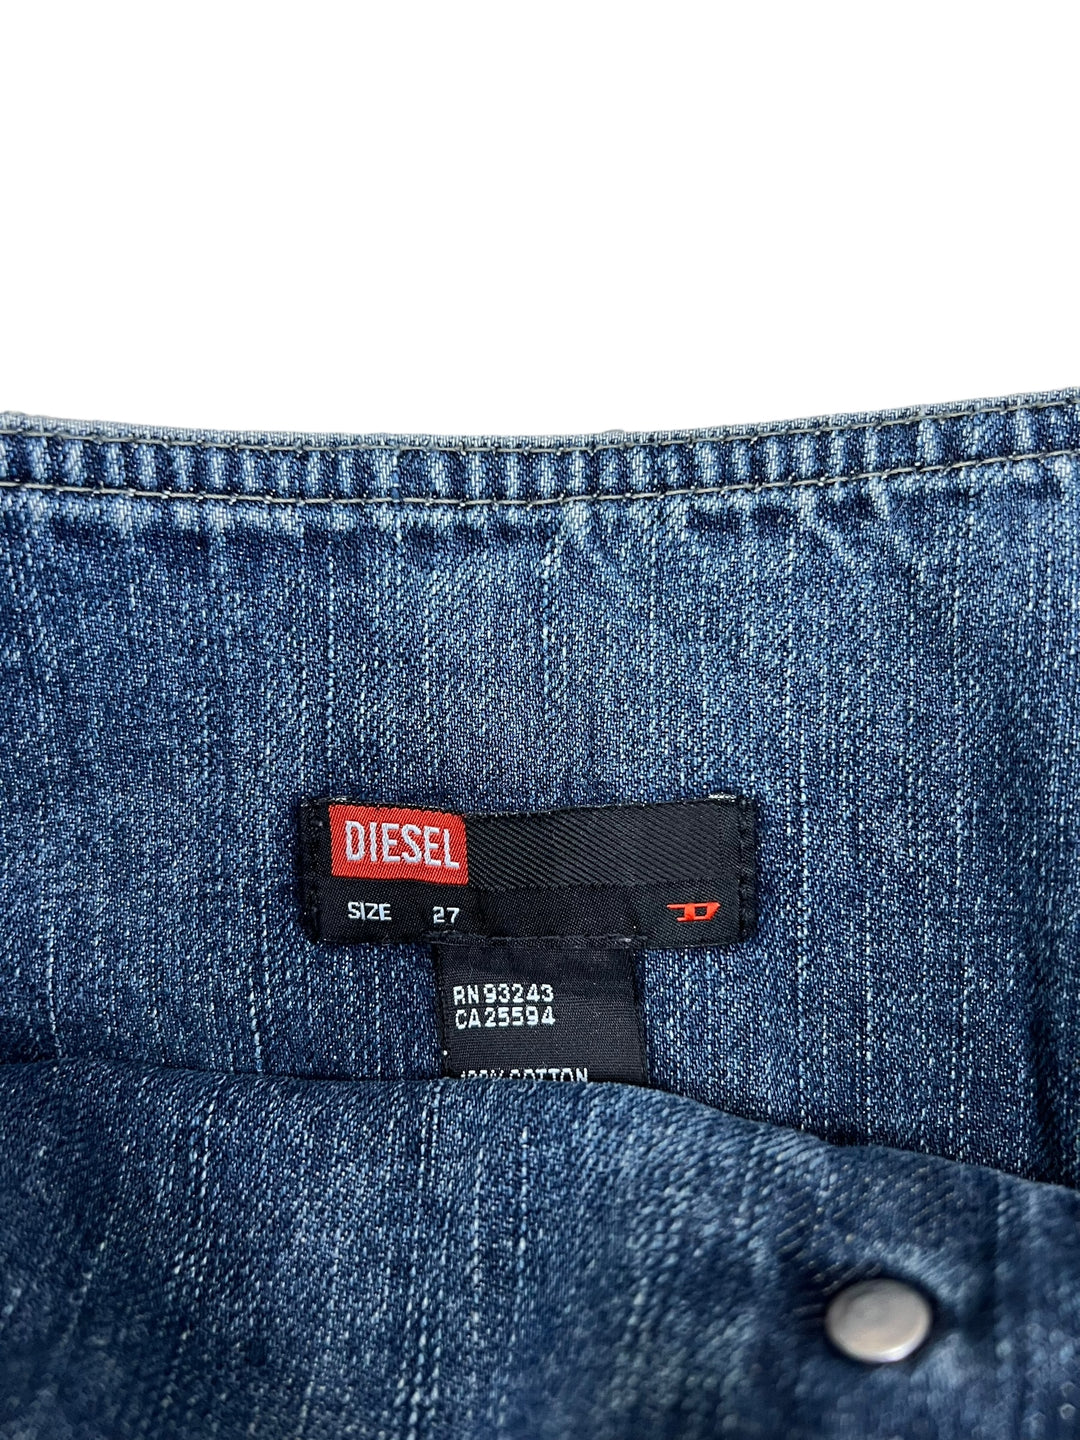 Diesel vintage denim mini skirt Women's Medium (38-40)